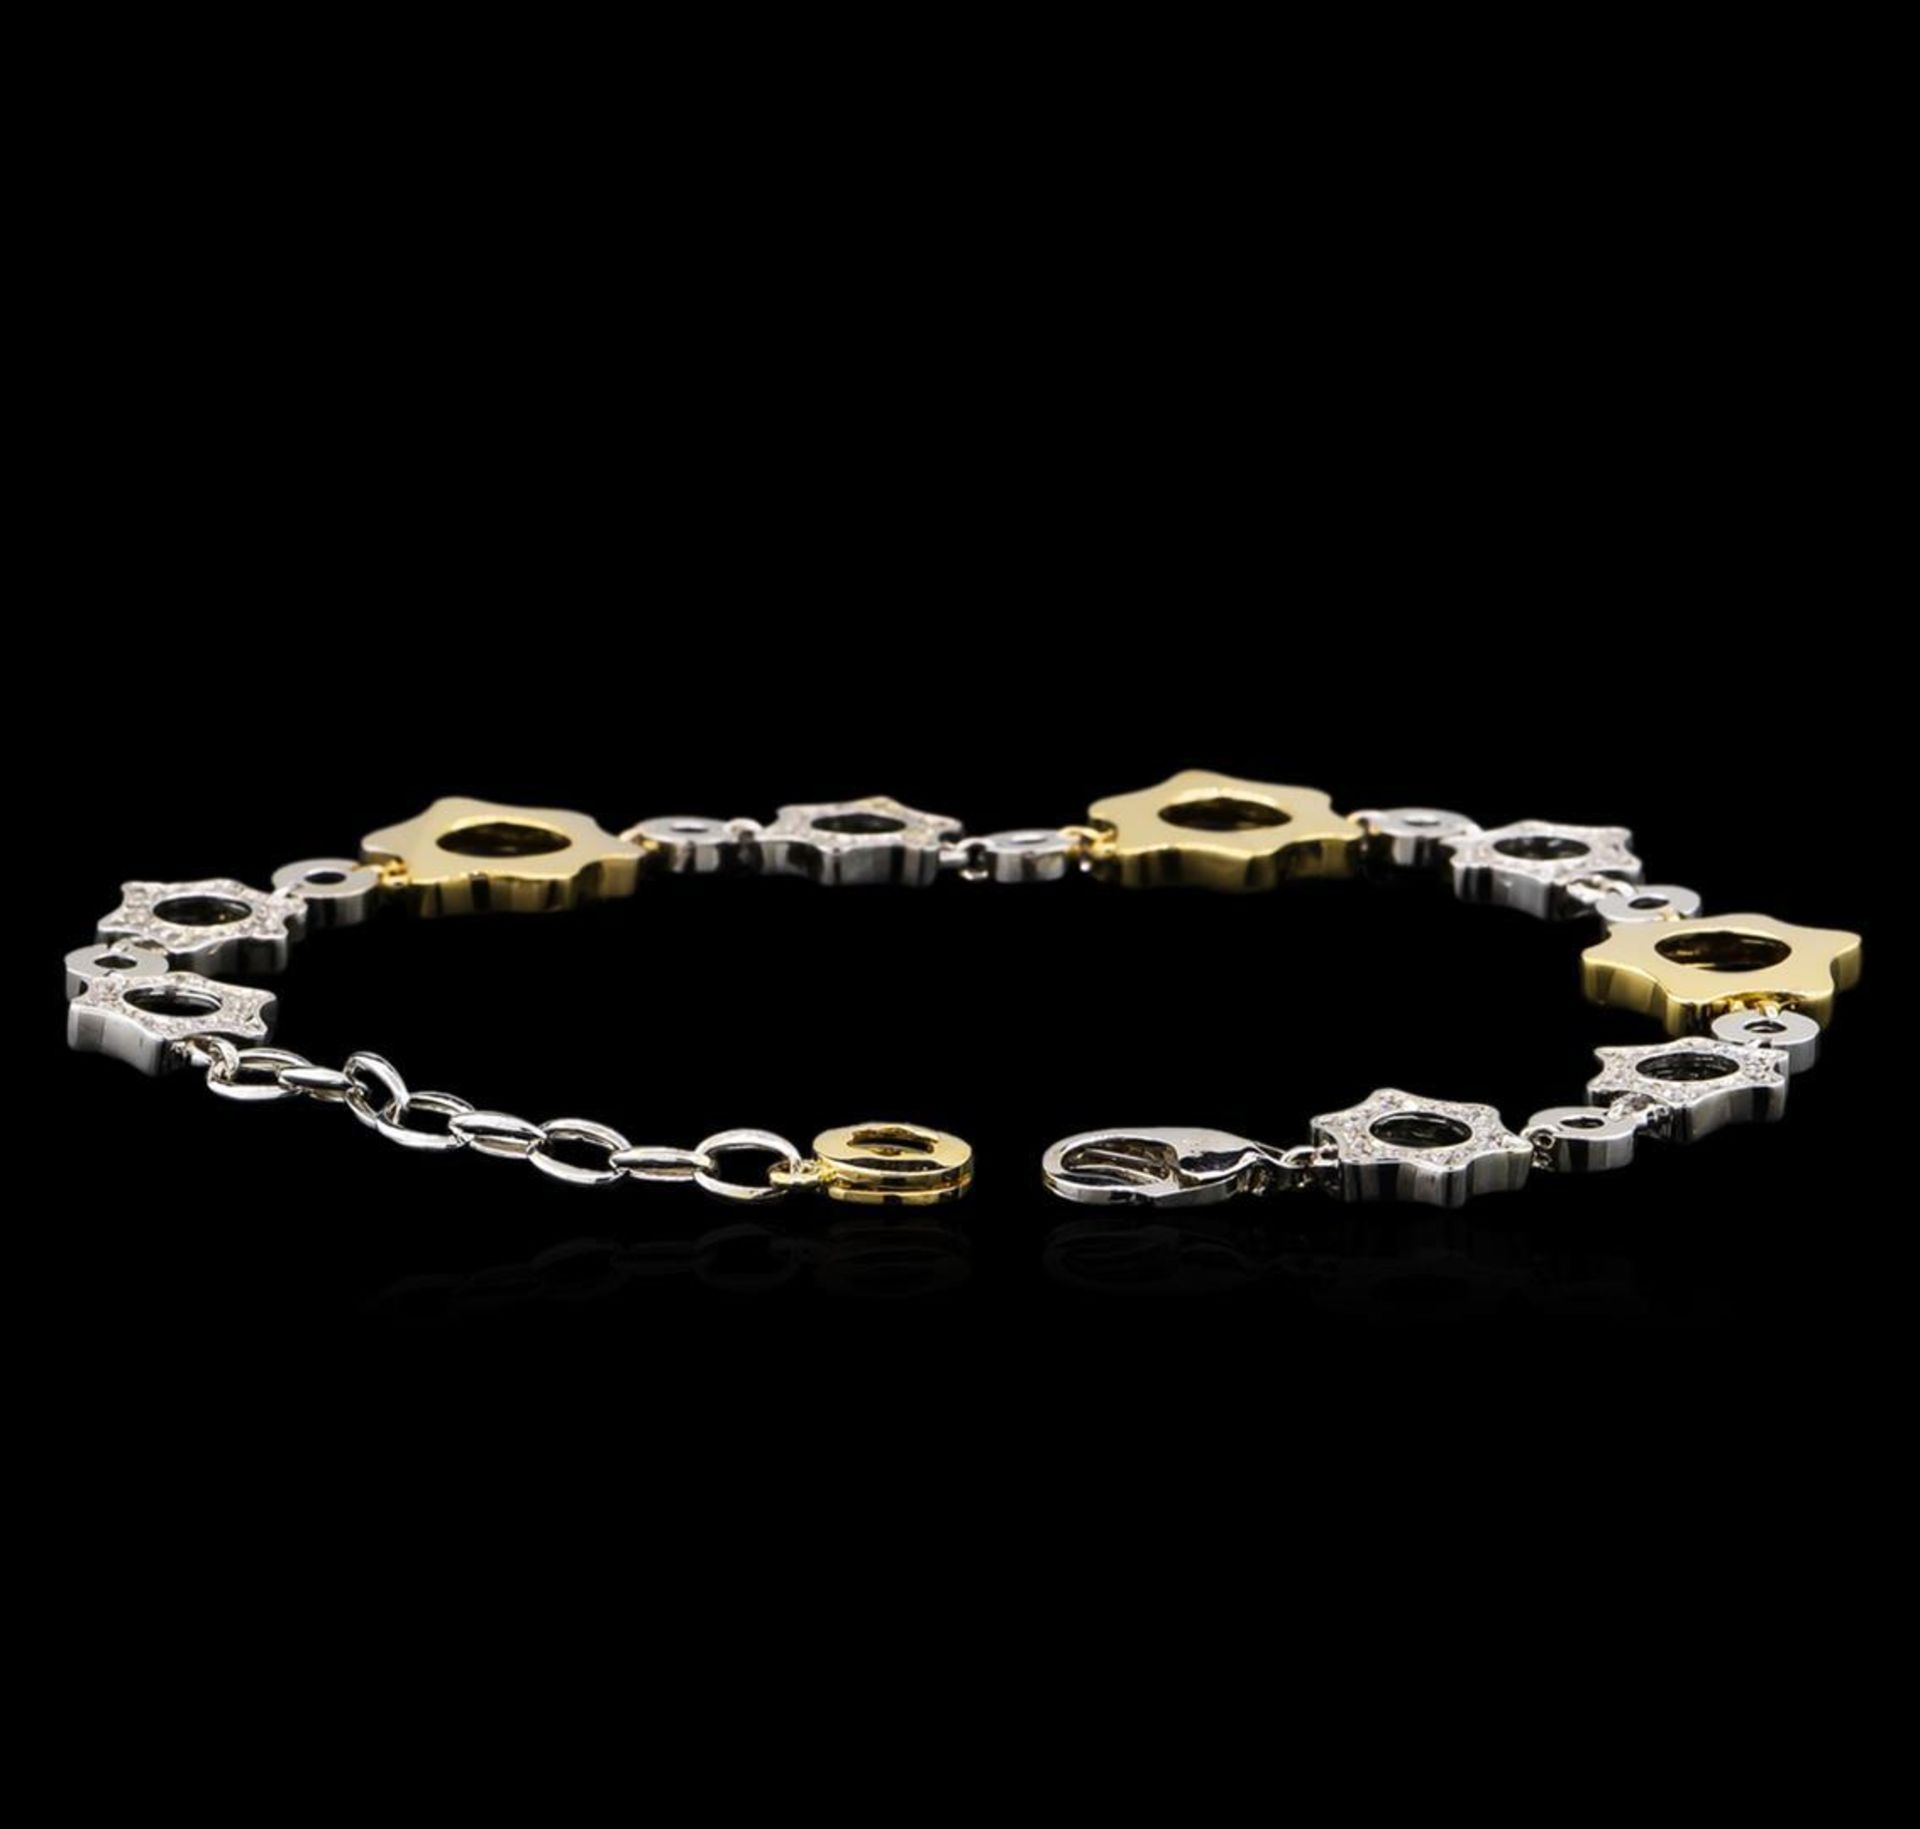 0.70 ctw Diamond Bracelet - 14KT Two-Tone Gold - Image 3 of 4